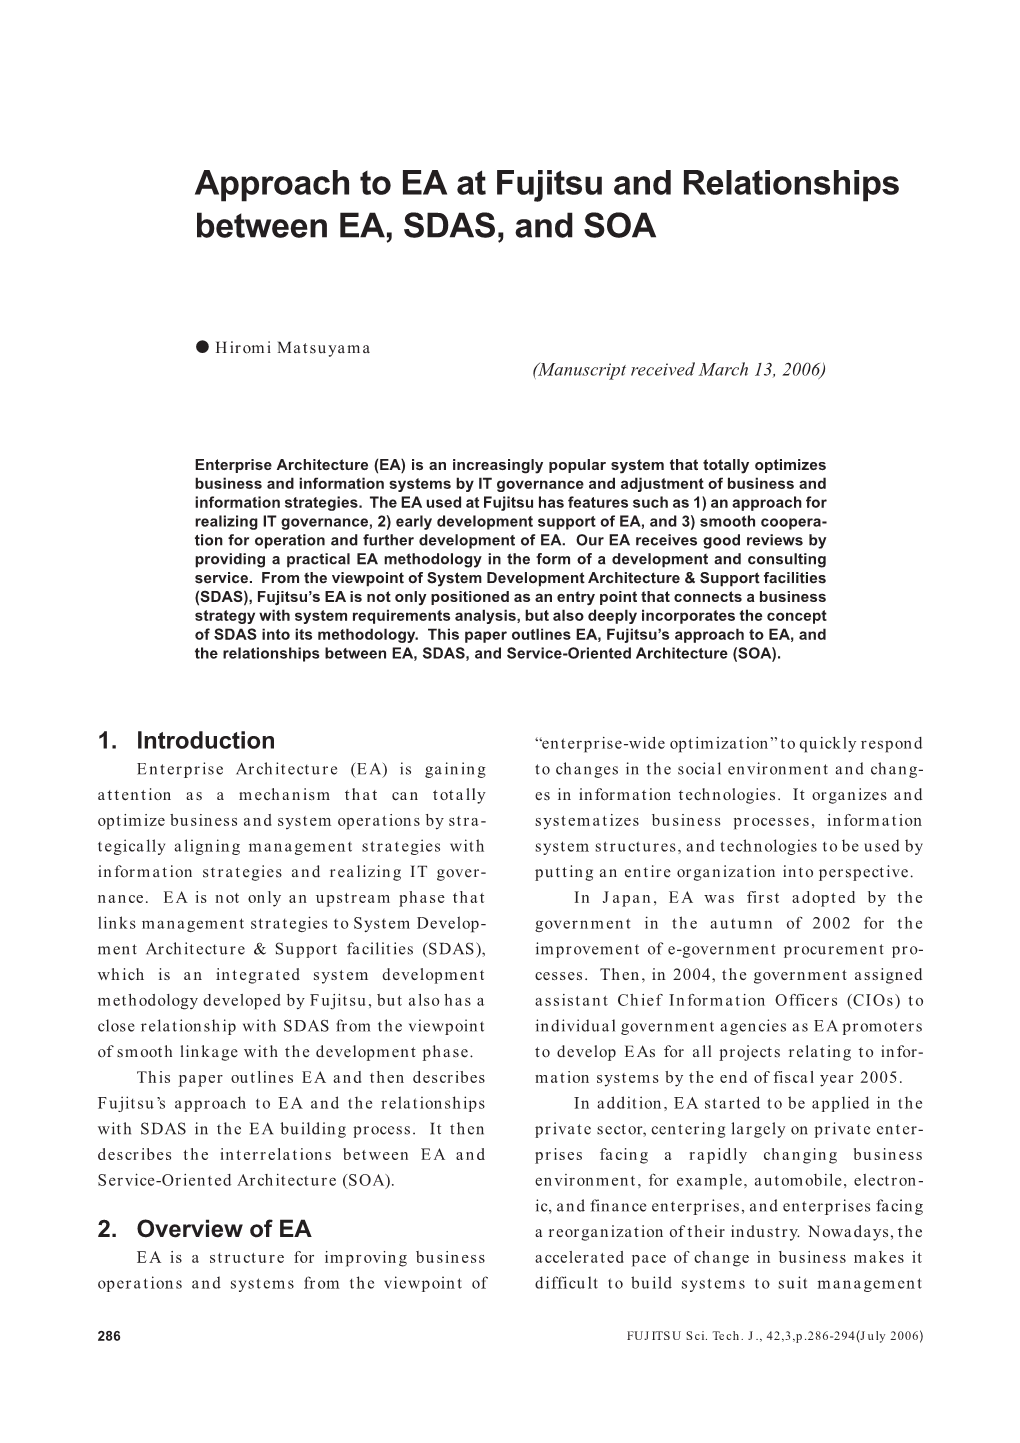 Approach to EA at Fujitsu and Relationships Between EA, SDAS, and SOA